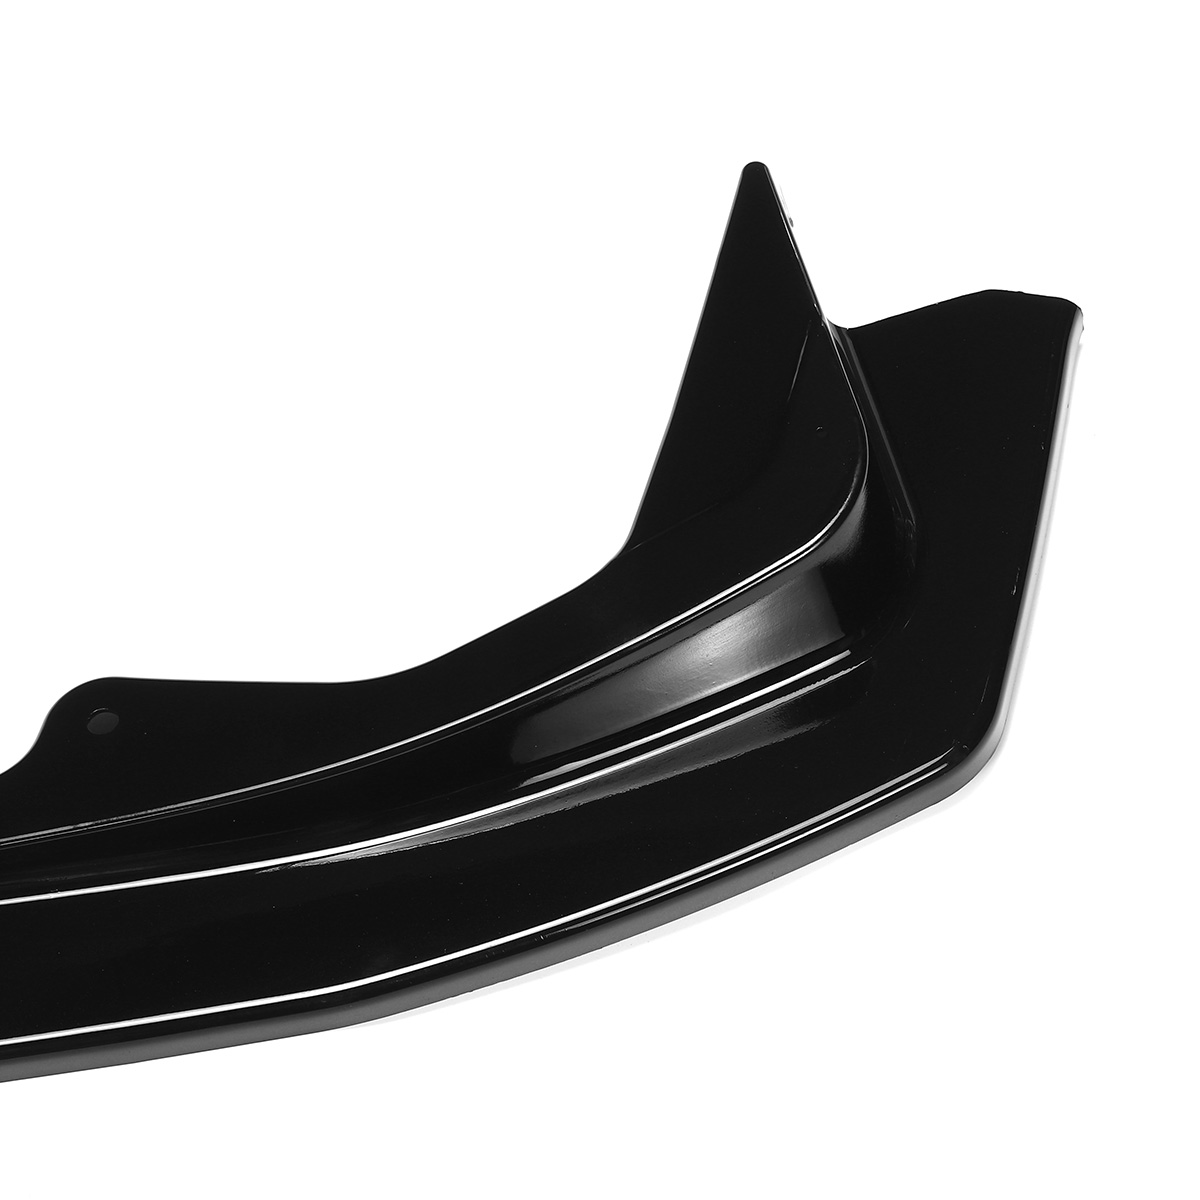 Gloss-Black-3PCS-Front-Bumper-Lip-Body-Protector-Kit-Chin-Spoiler-For-ToyotAvalon-2019-1545048